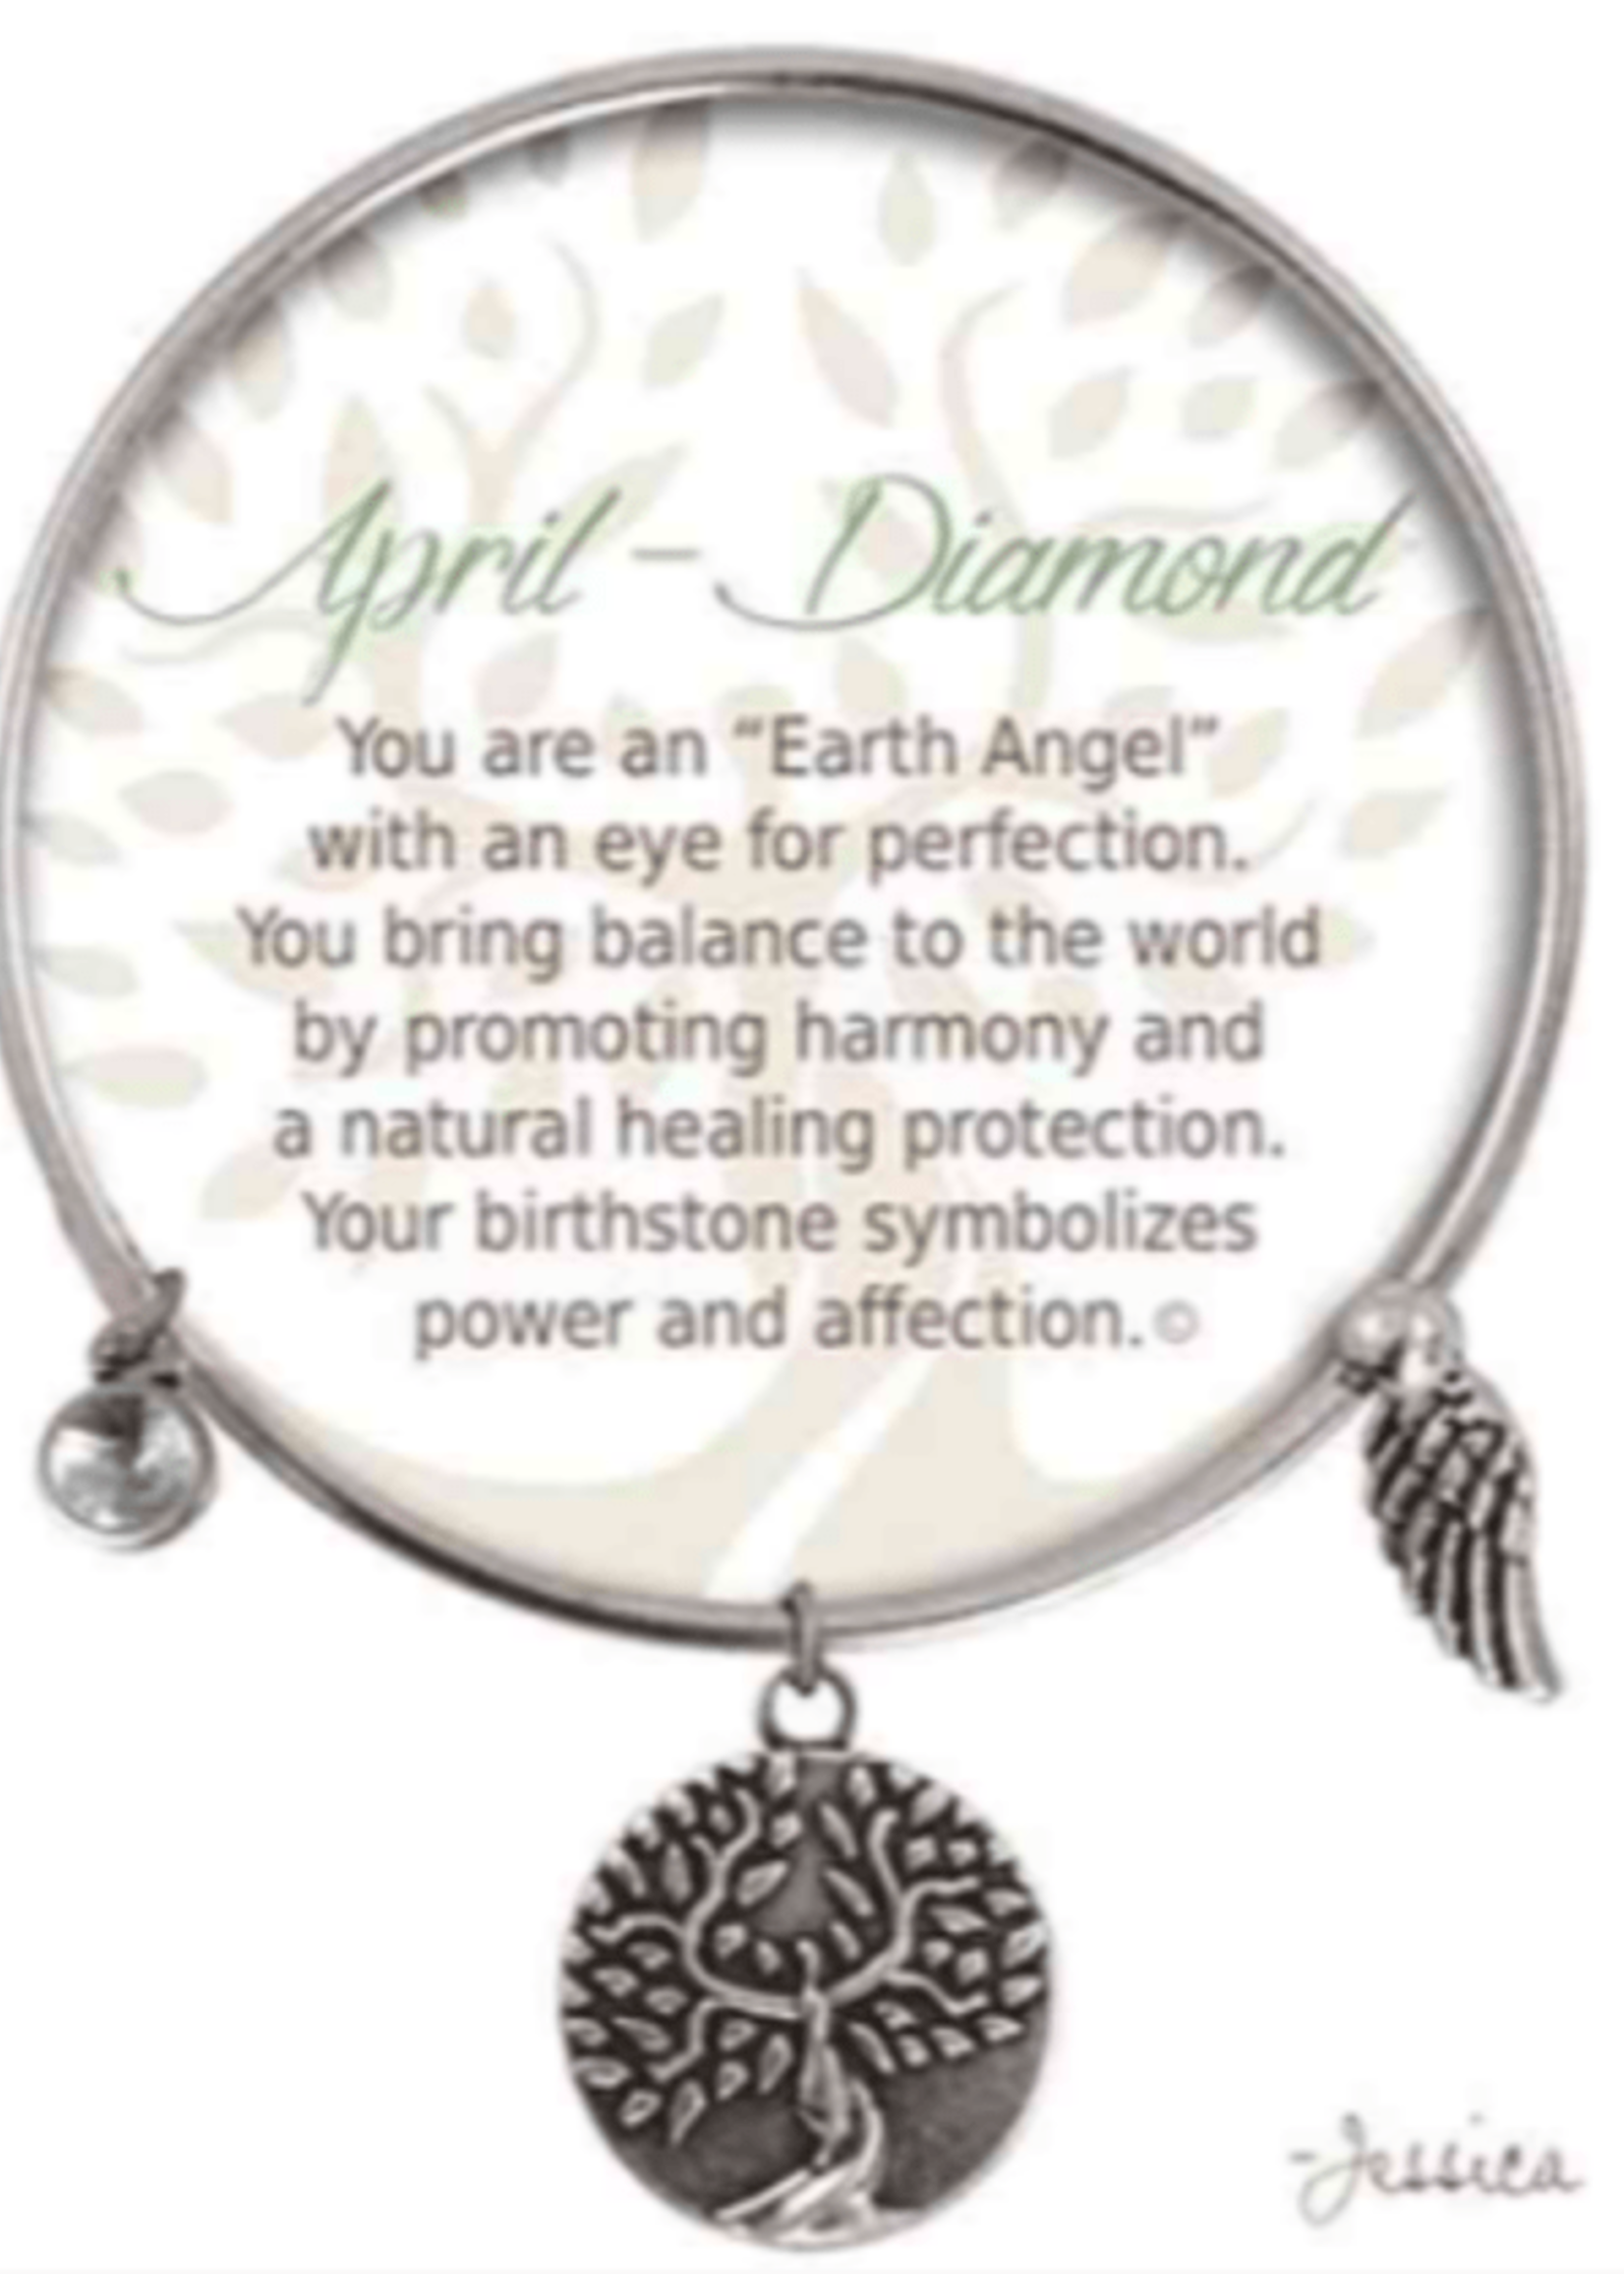 EARTH ANGEL BRACELET - APRIL: DIAMOND